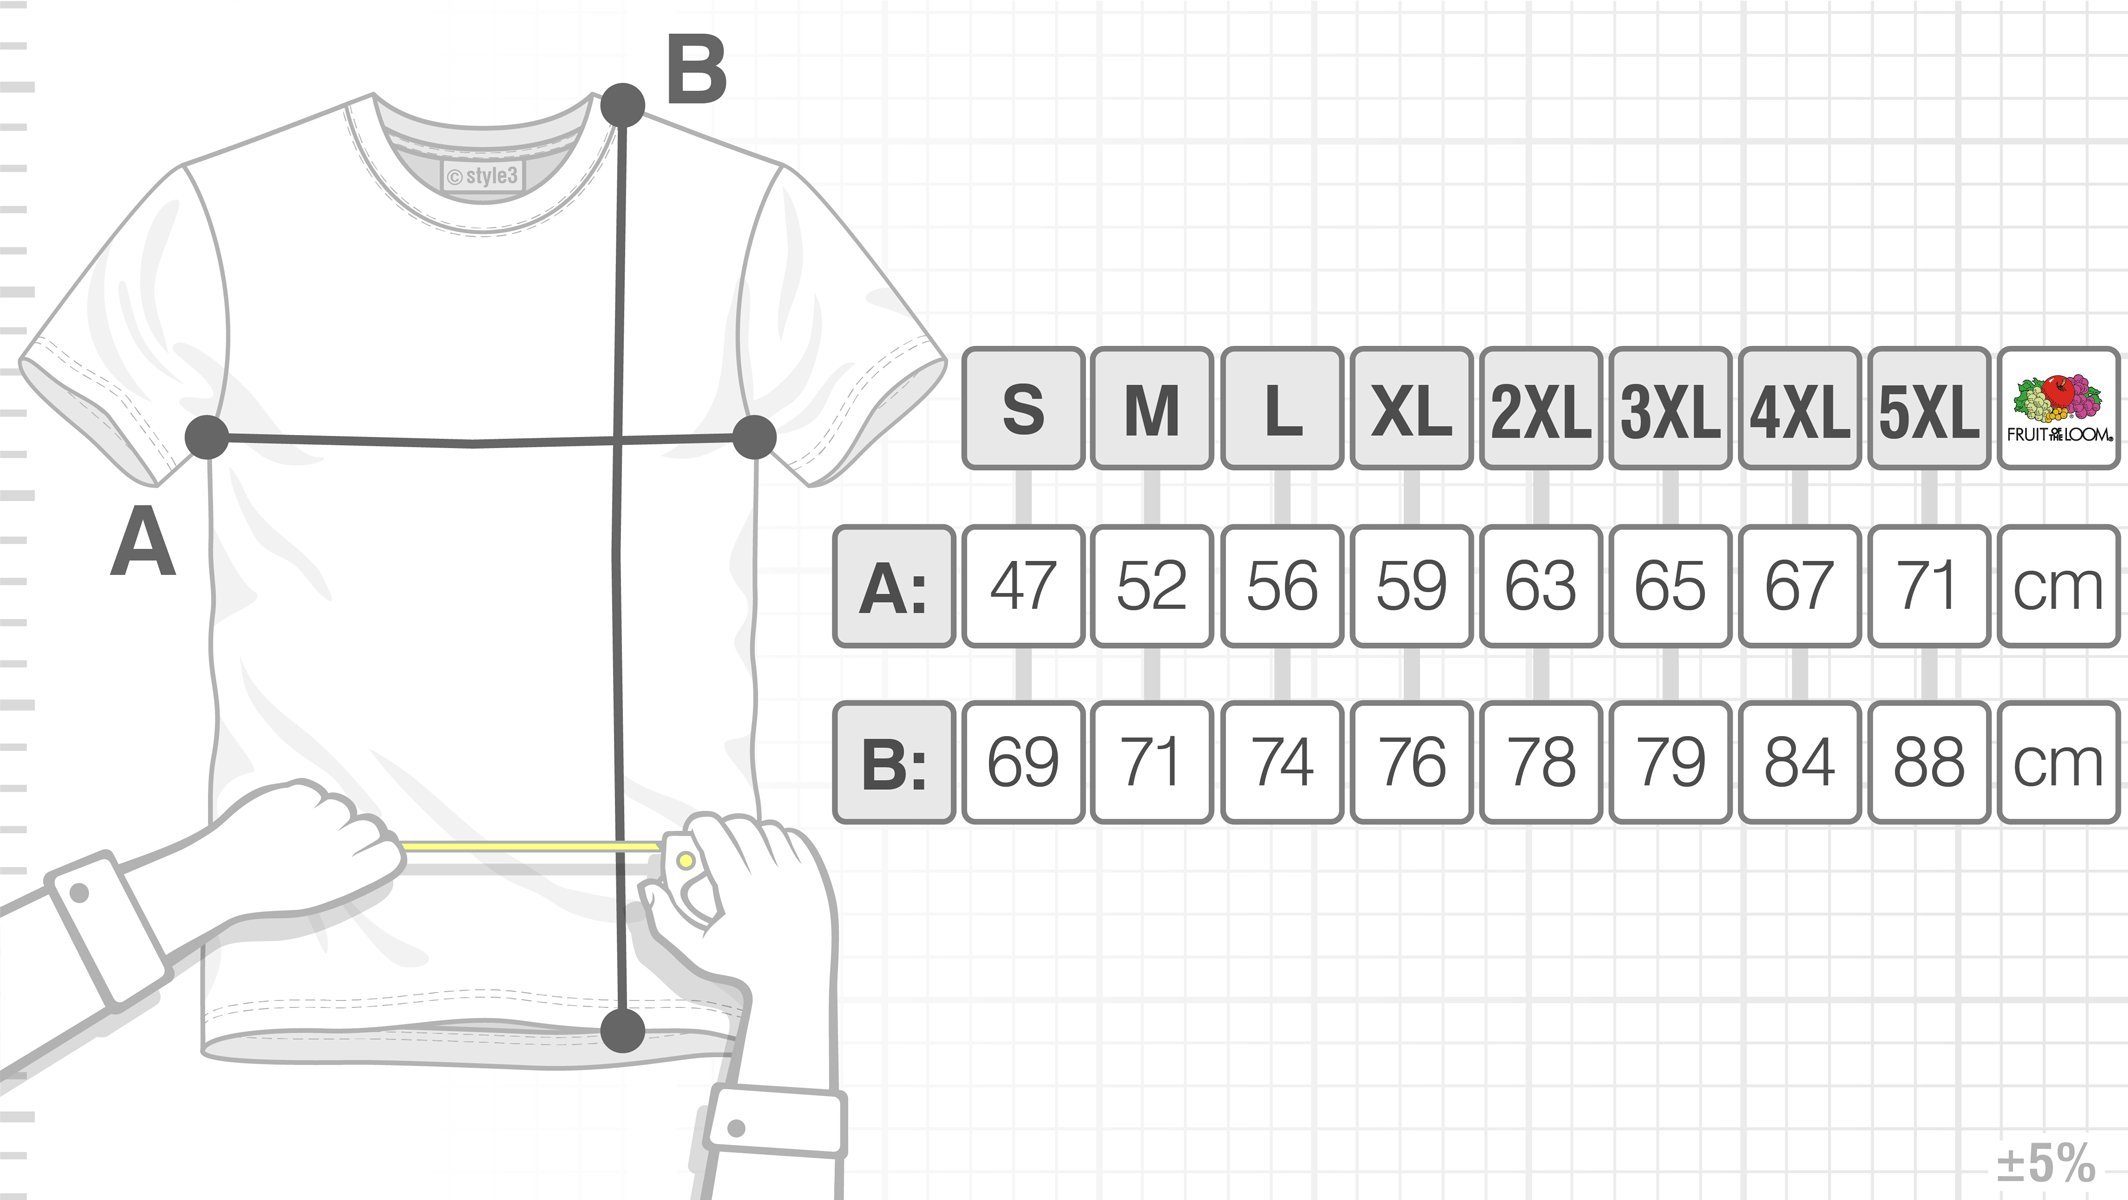 Videospiel grün Print-Shirt 16-Bit T-Shirt SNES Blaupause style3 Herren